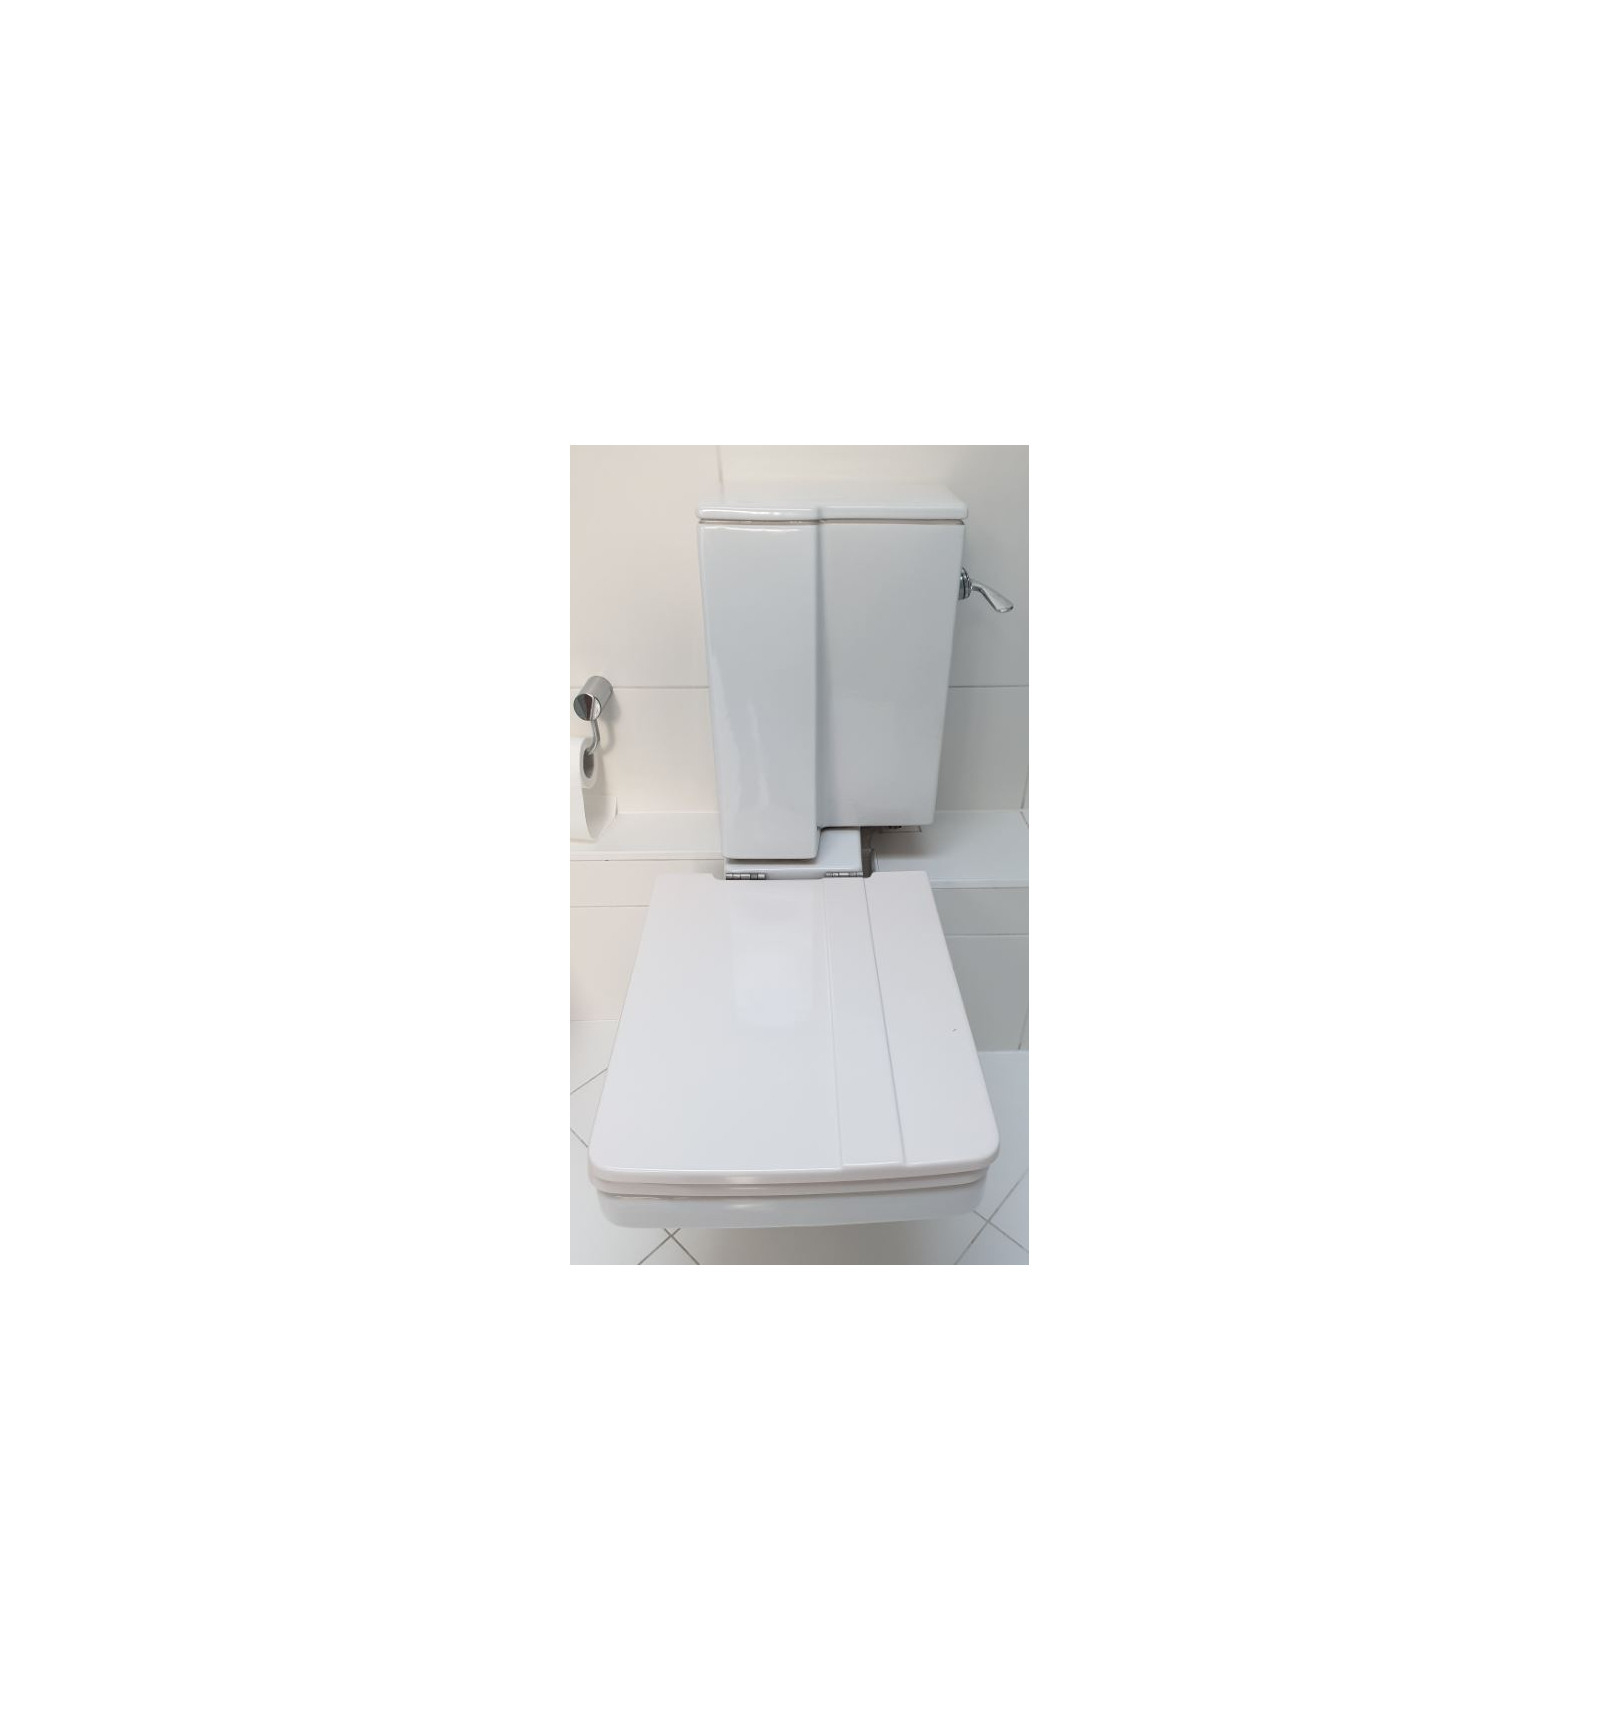 Seat Wc Selles Shanga Adaptable In Resiwood - Tapadelwater tout Toilette Selles